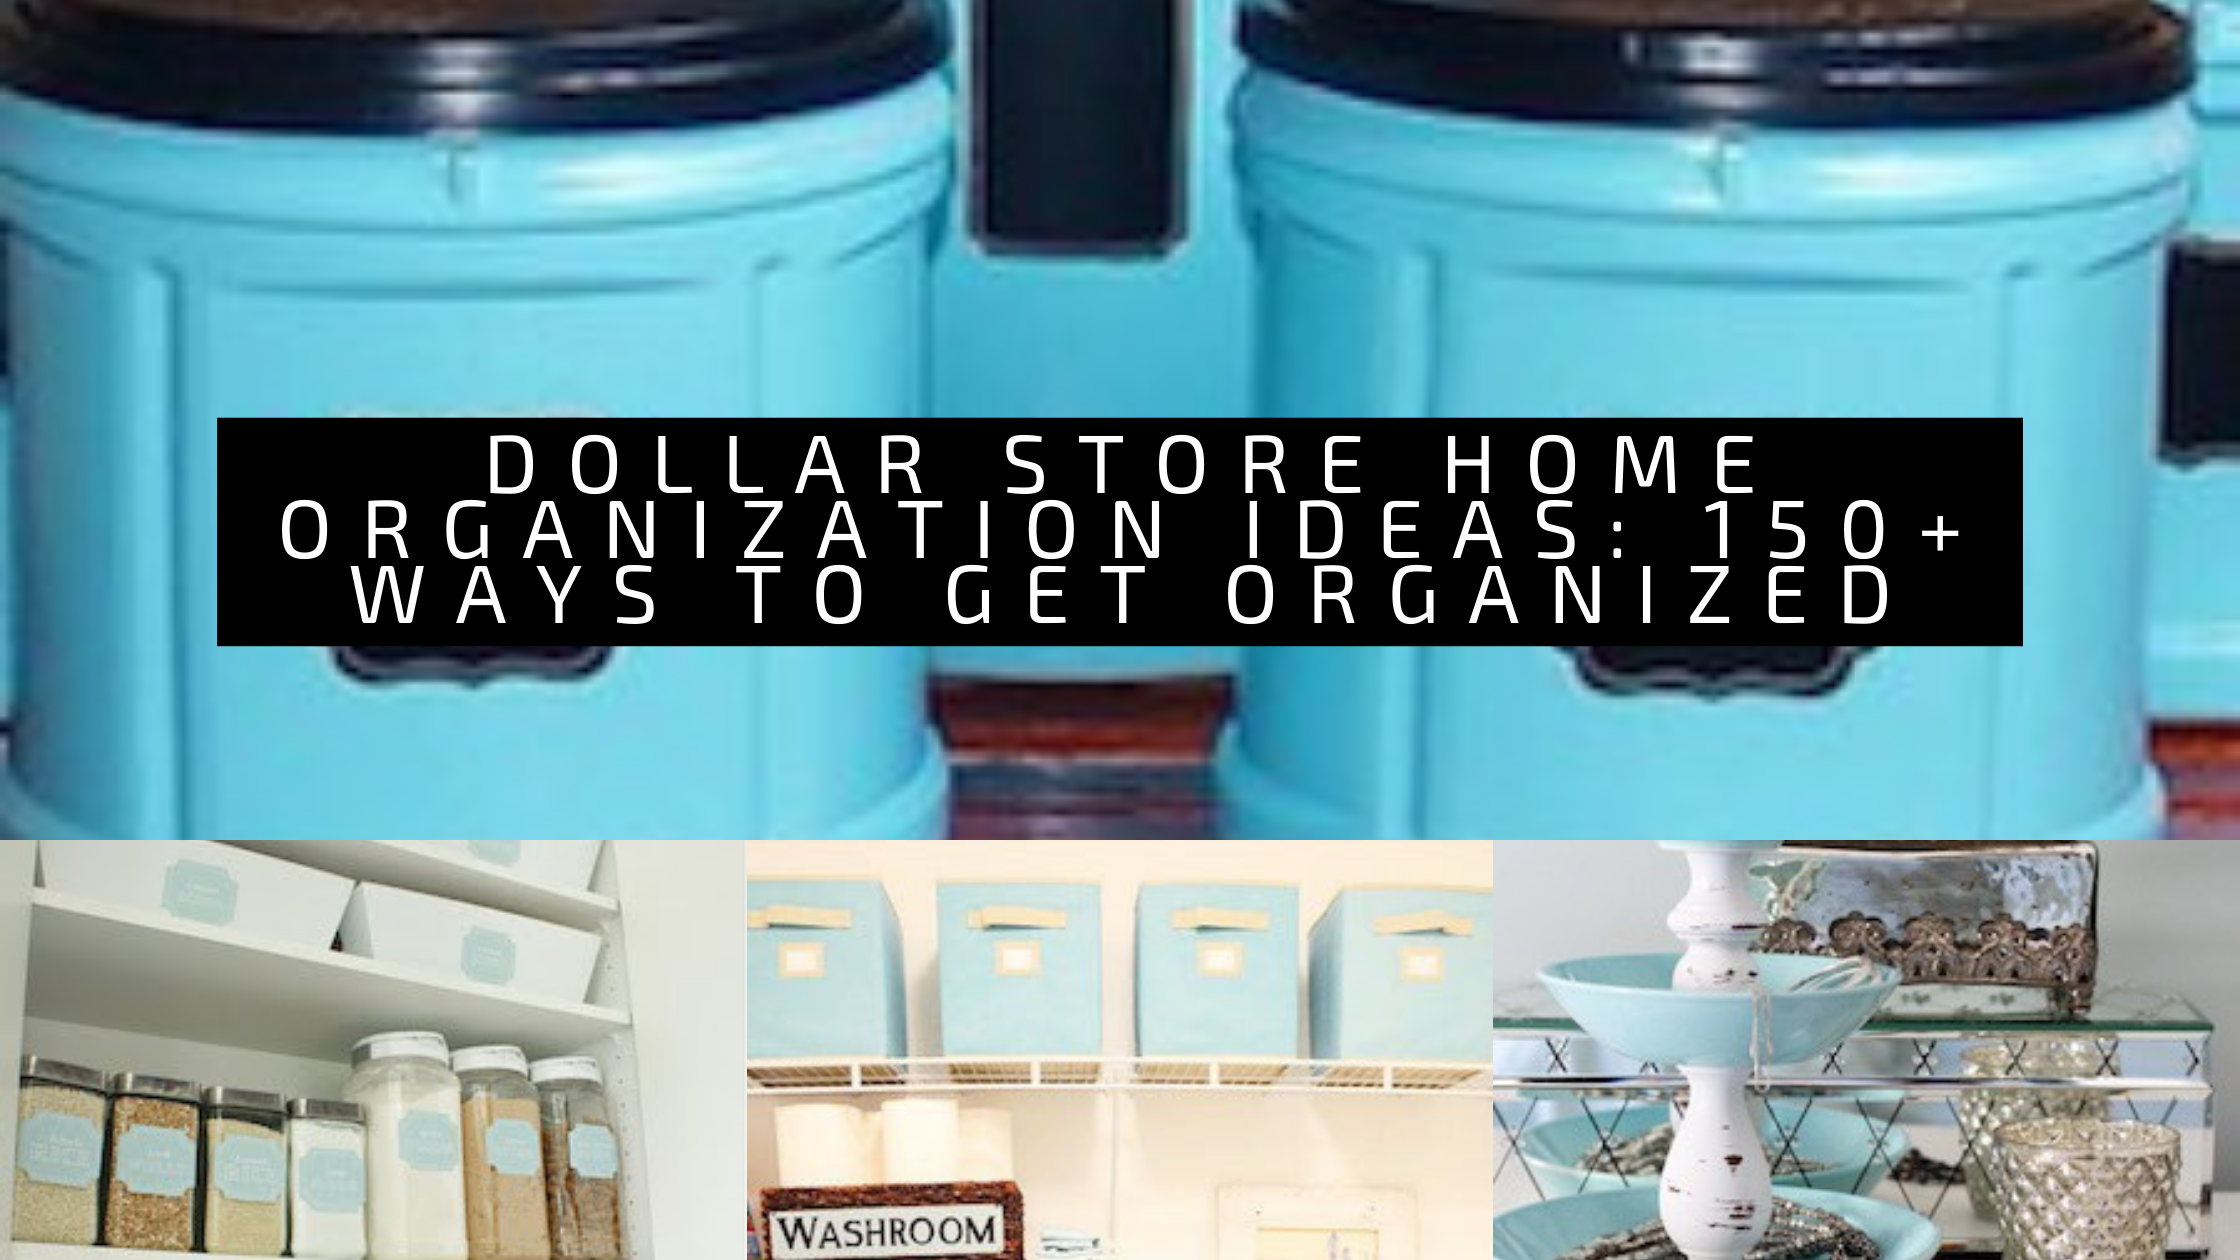 Dollar Store Home Organization Ideas: 150+ Ways to Get Organized 5